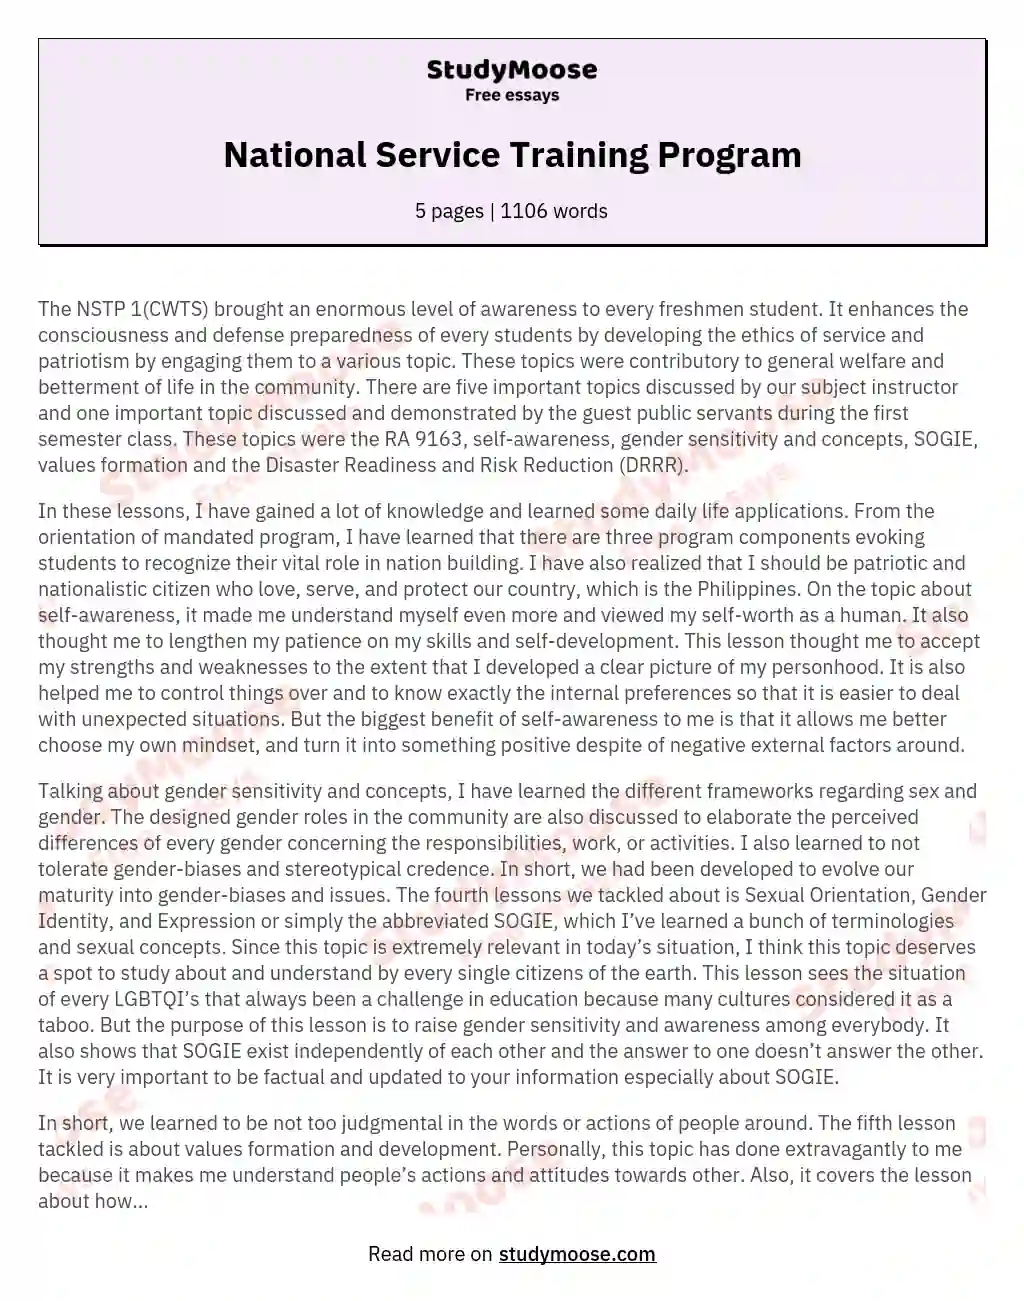 importance of national service training program essay